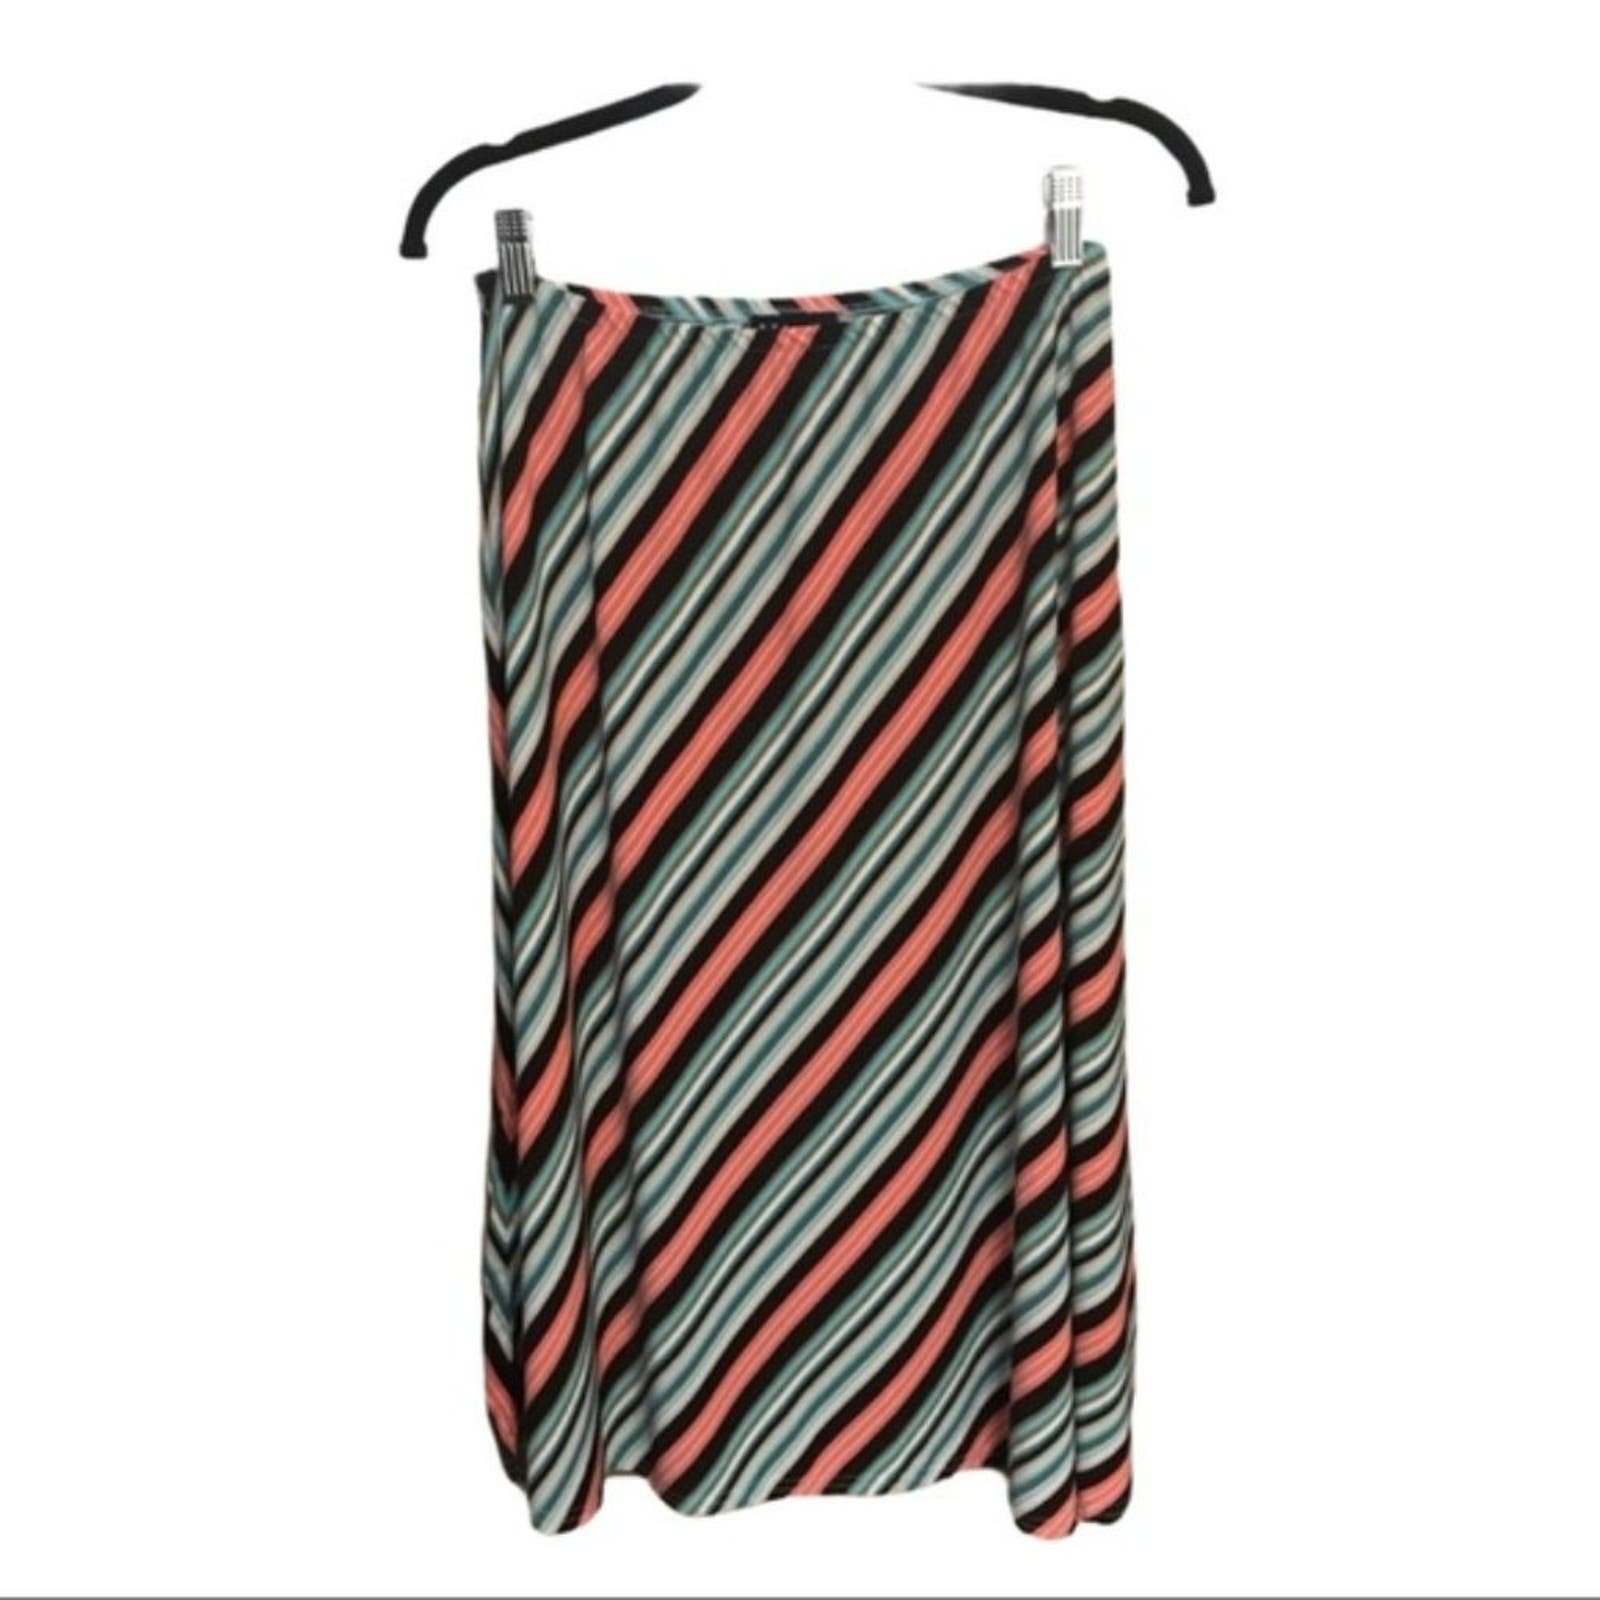 Discounted Diagonal Stripe Spring Skirt Medium Medium kXFok17MR Outlet Store